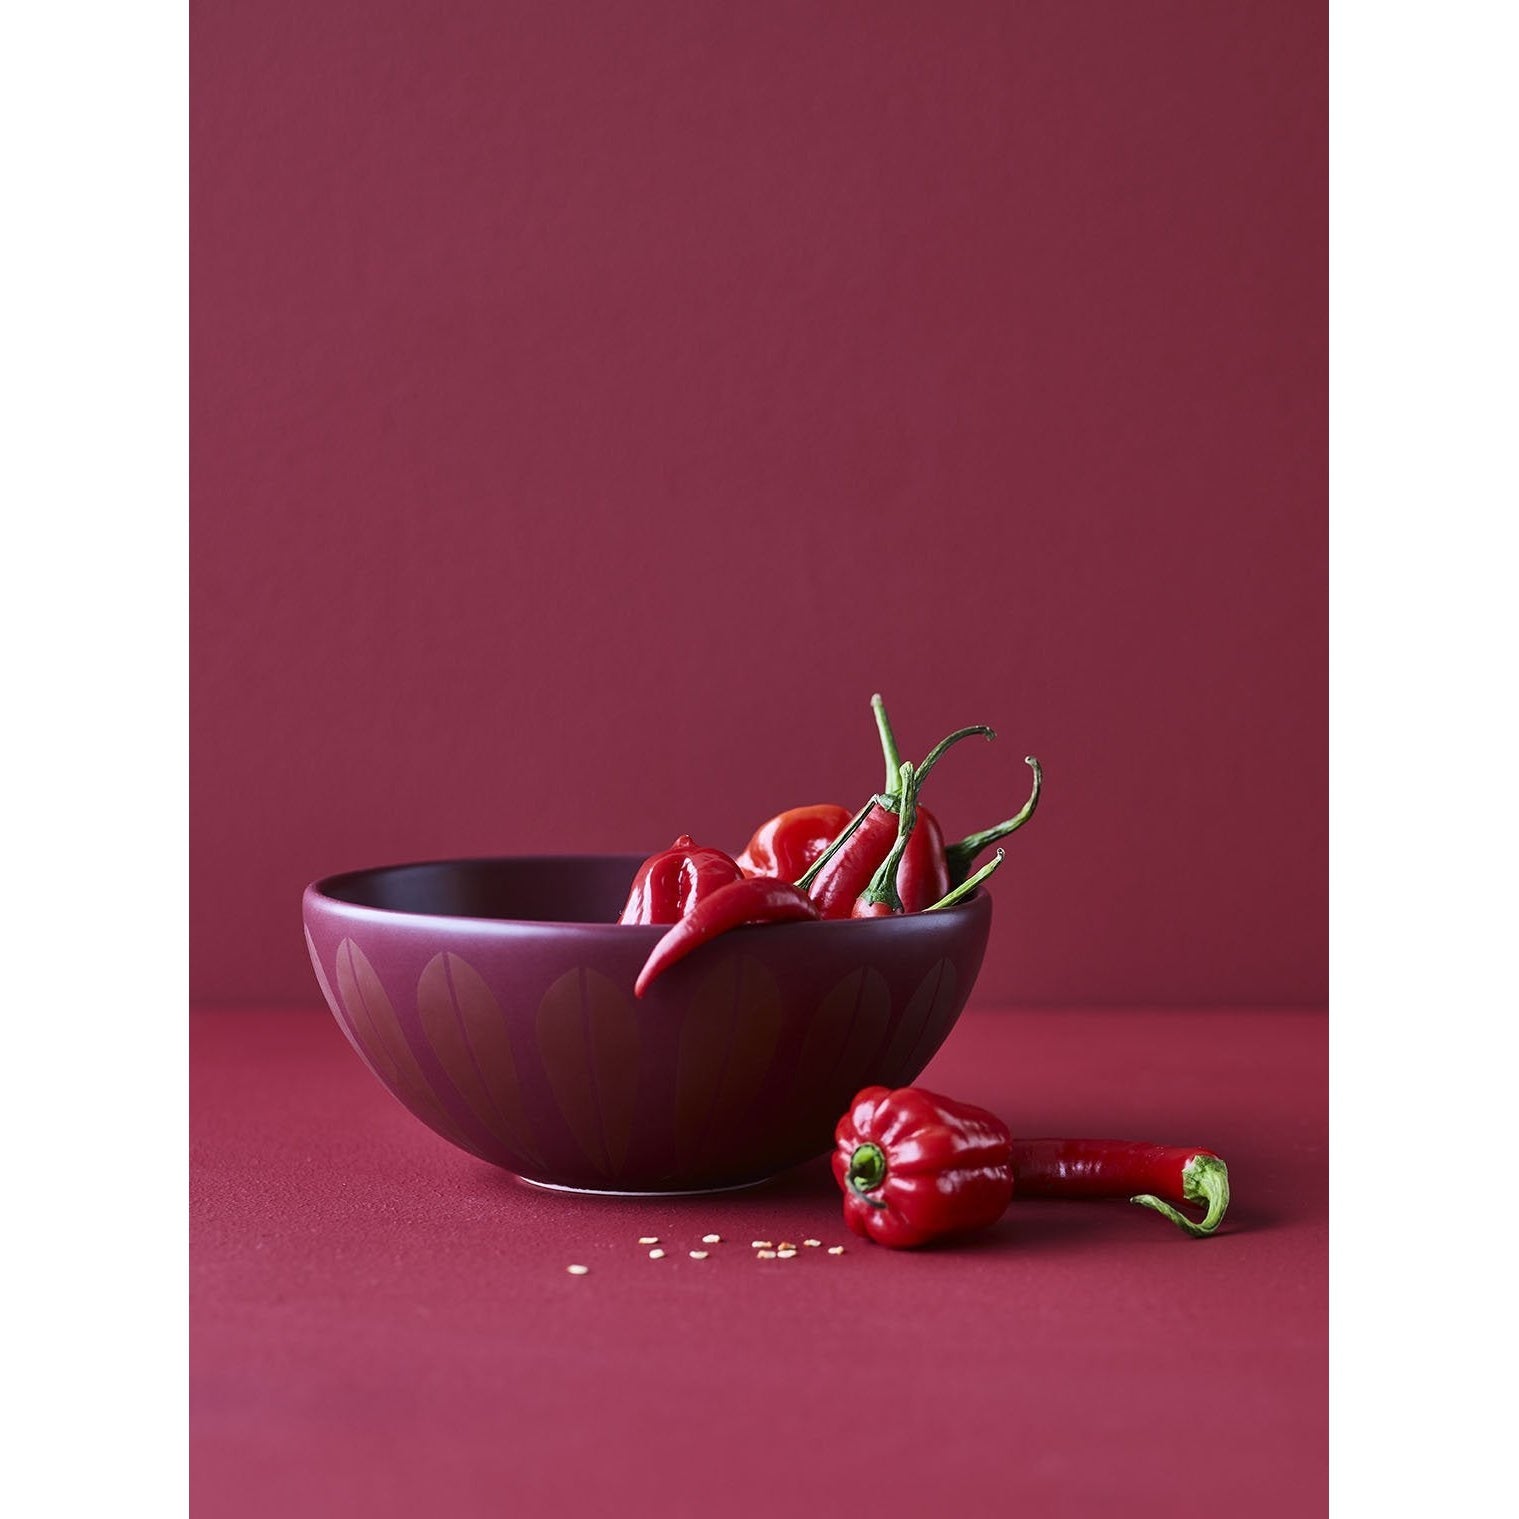 Lucie Kaas Arne Clausen Bowl Dark Red, 15 cm